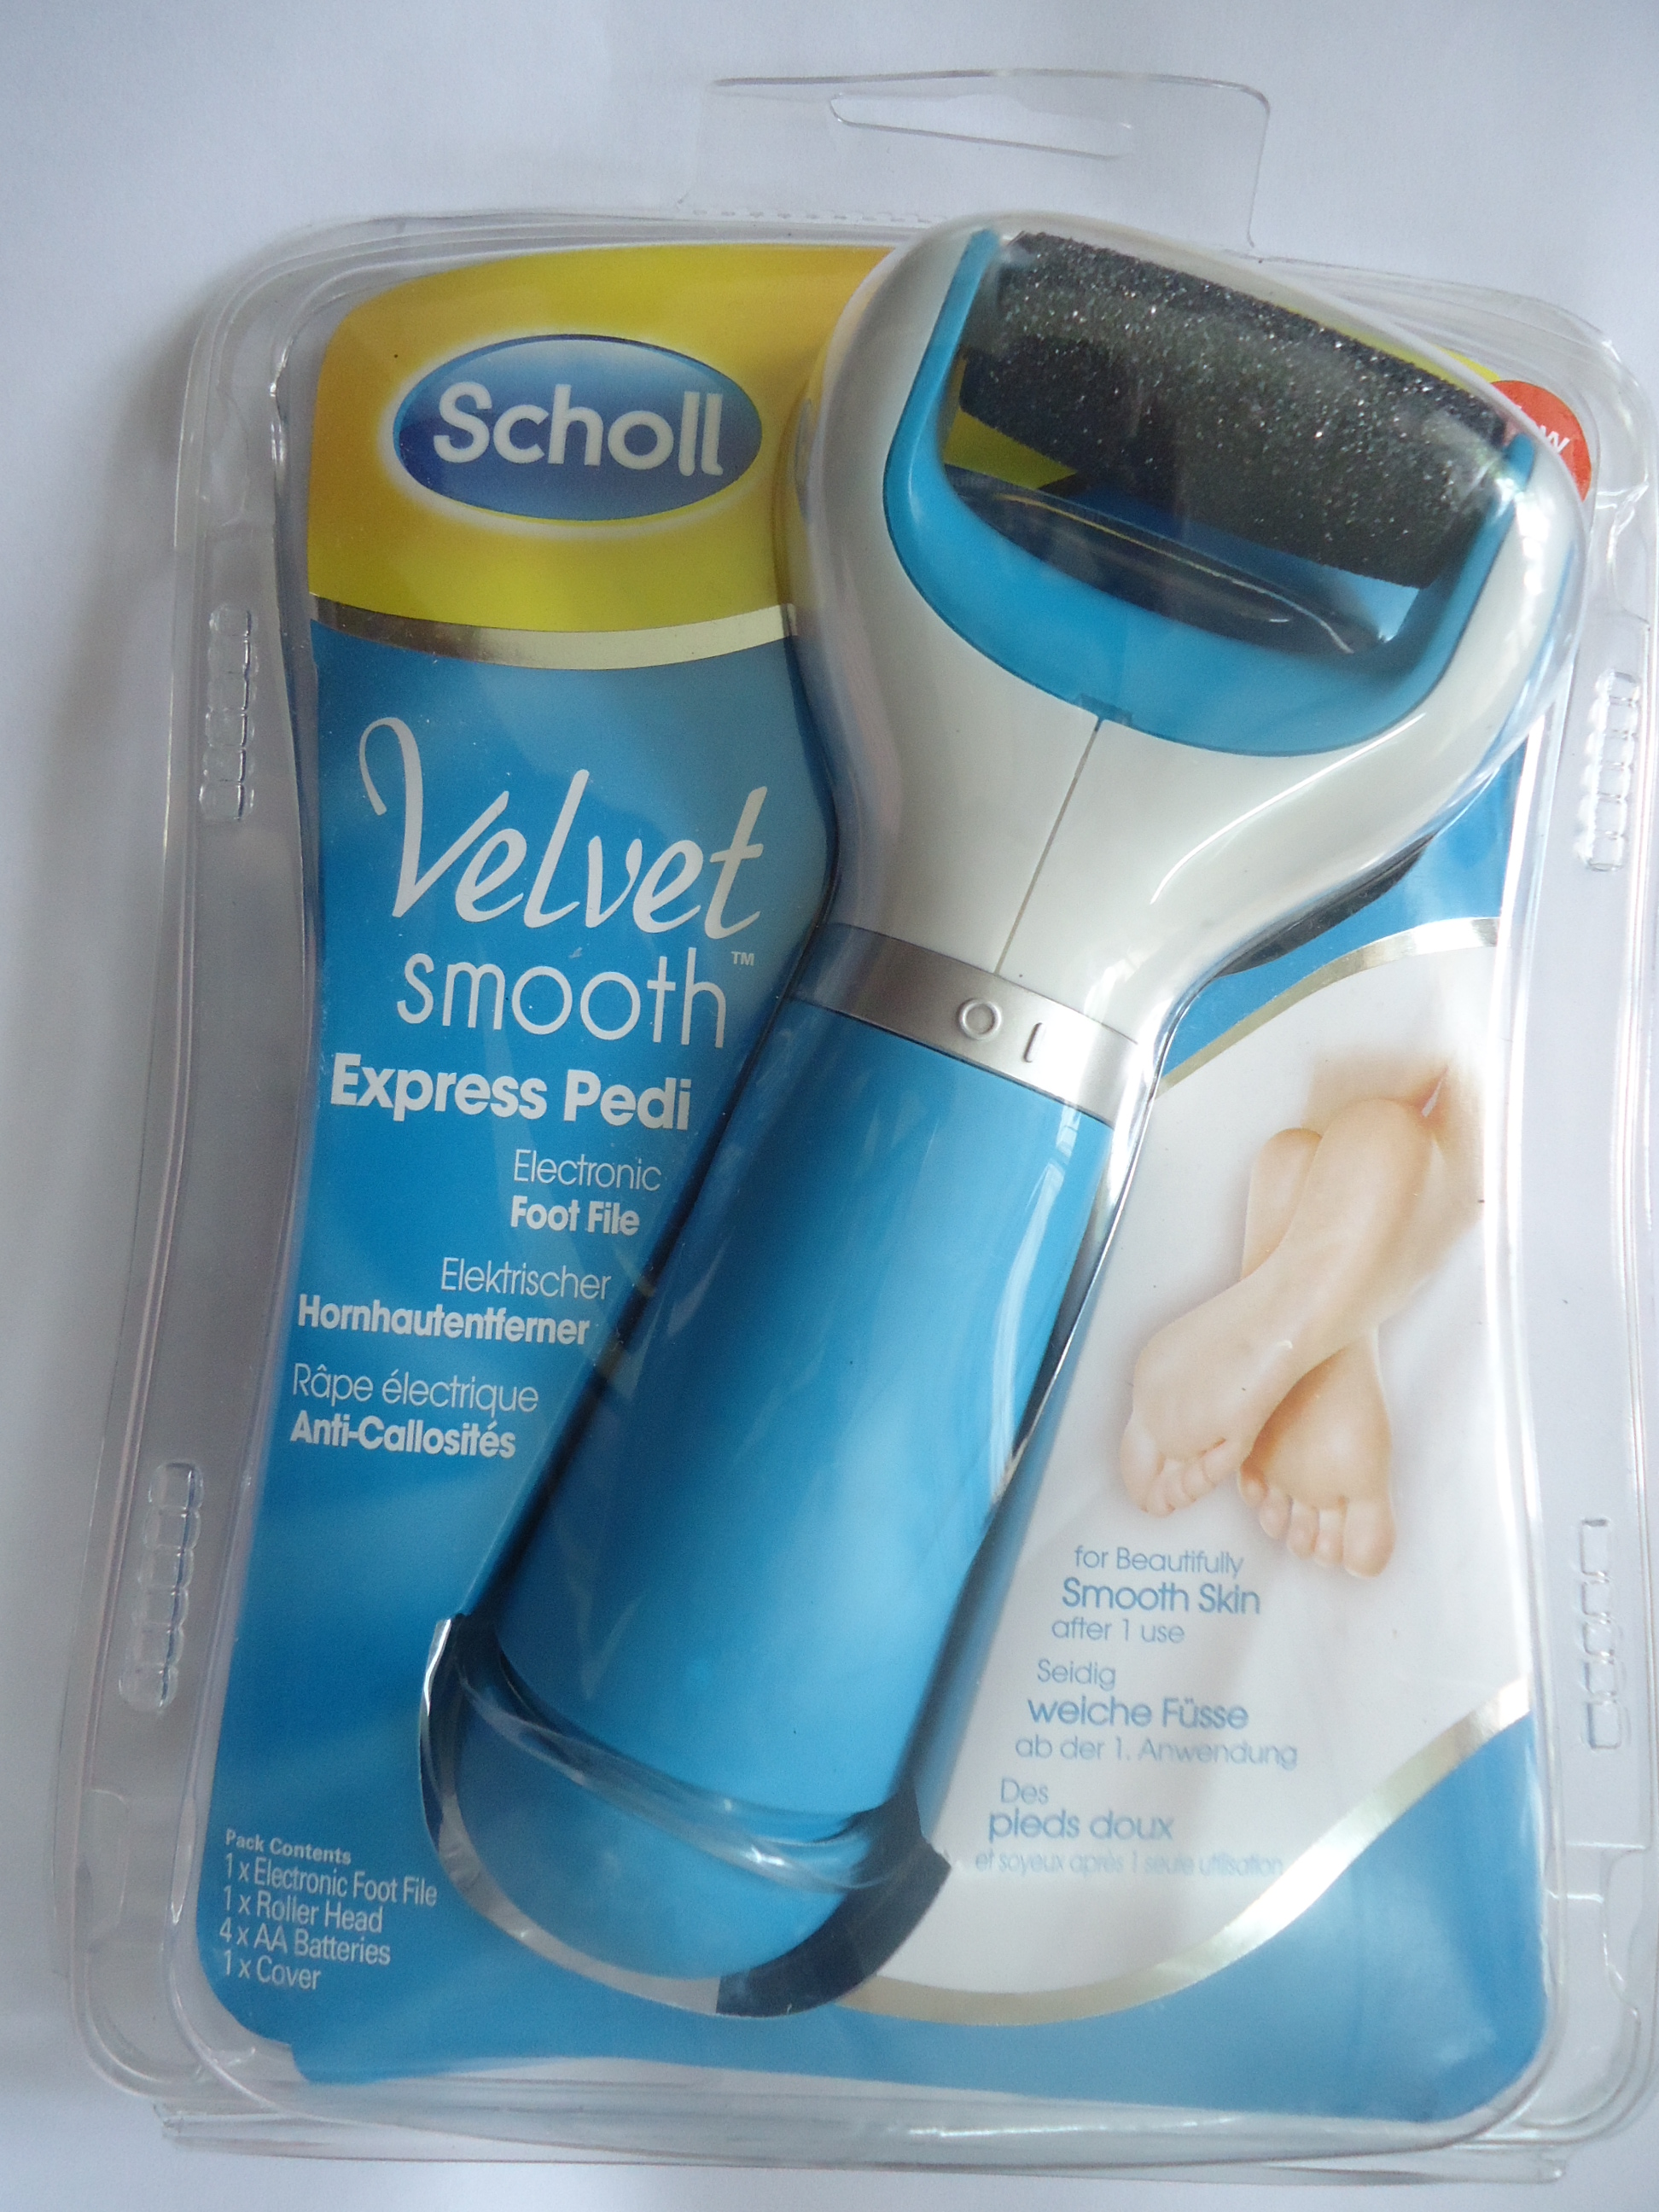 Meetbaar Oplossen Somatische cel Scholl Velvet Smooth Express Pedi Electronic Foot File Review - New Love -  Makeup